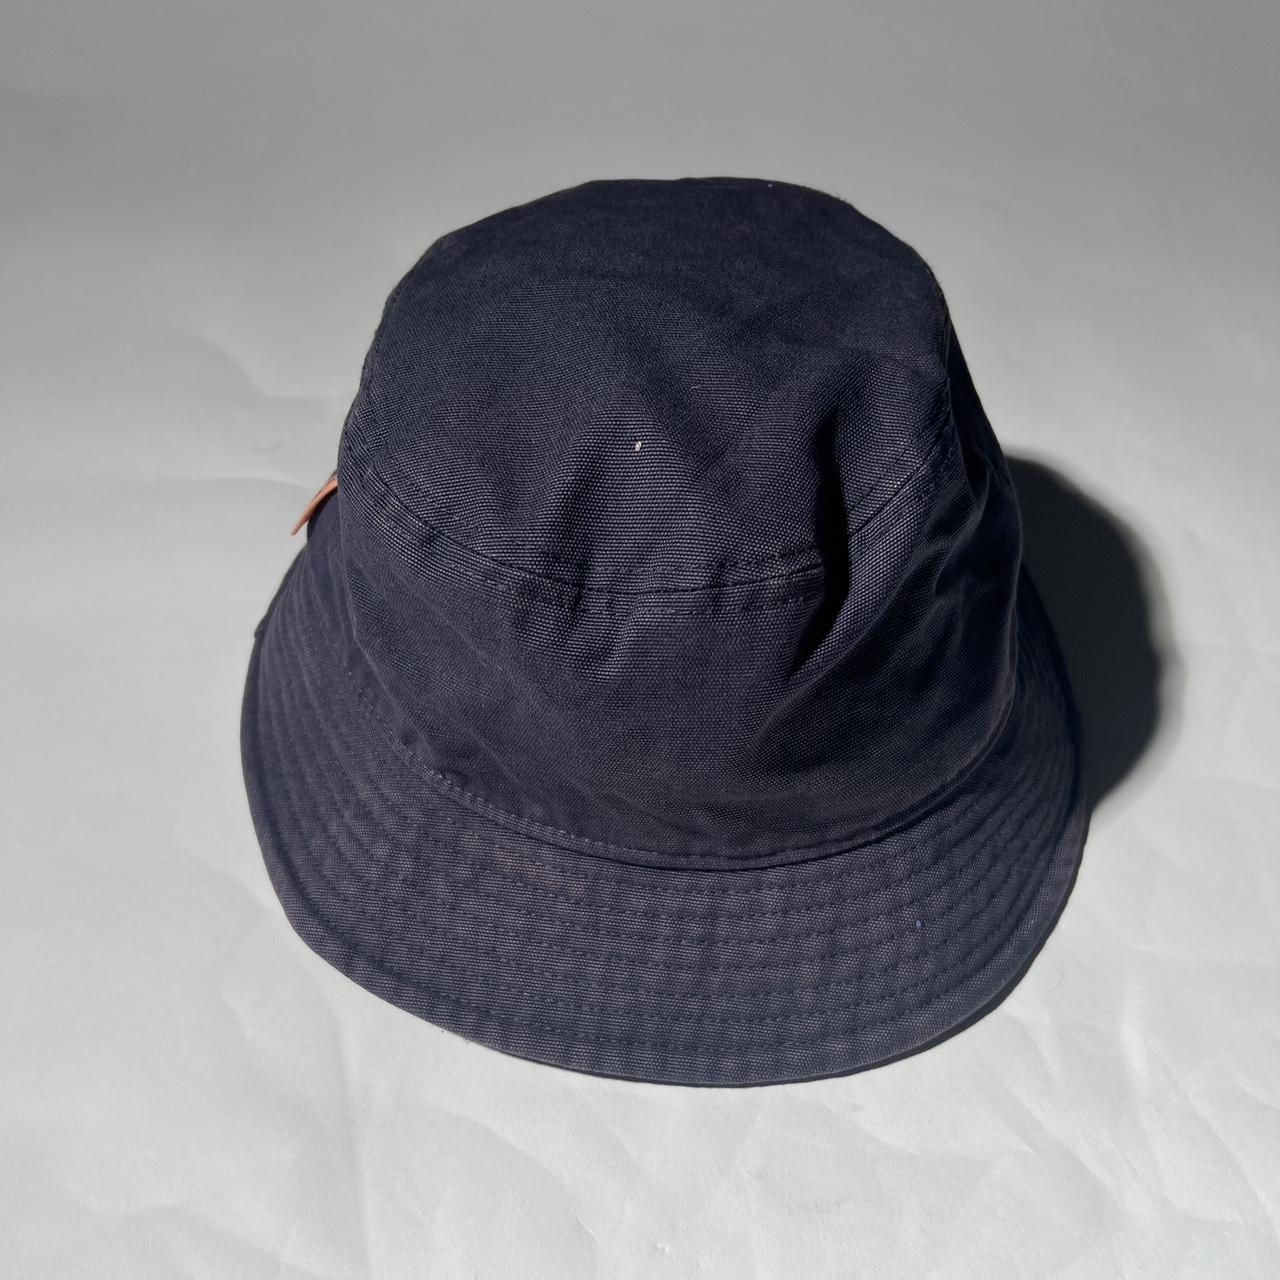 Acne Studios Men's Blue and Navy Hat - 3